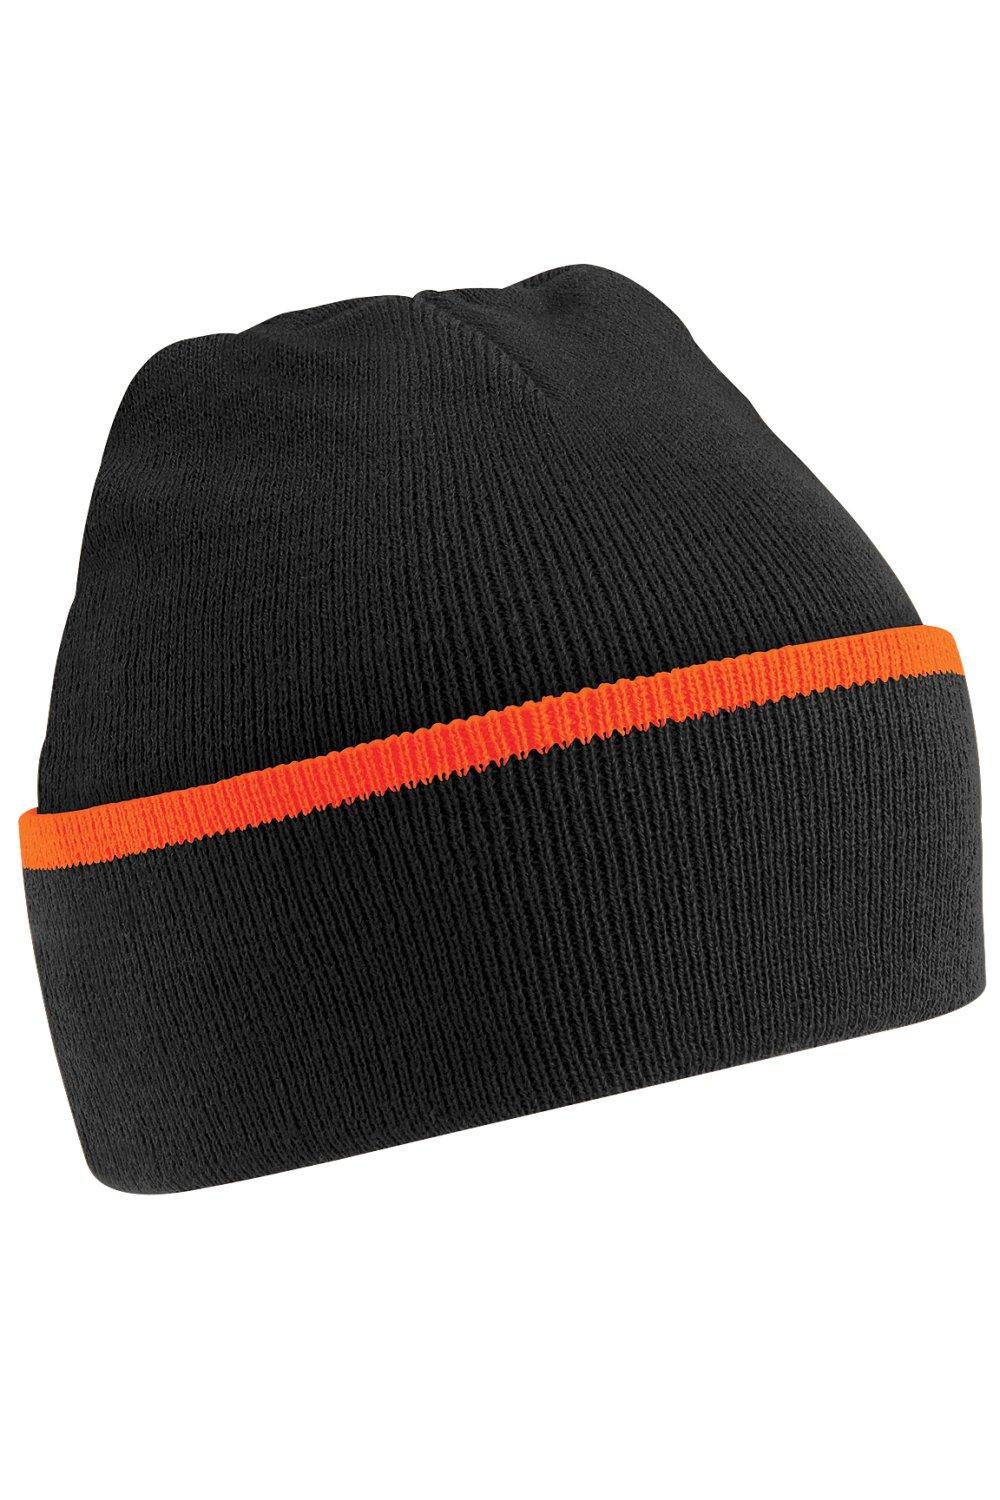 Вязаная зимняя шапка-бини Beechfield, черный шапка балаклава cokk зимняя вязаная шапка шапка маска зимняя шапочка бини